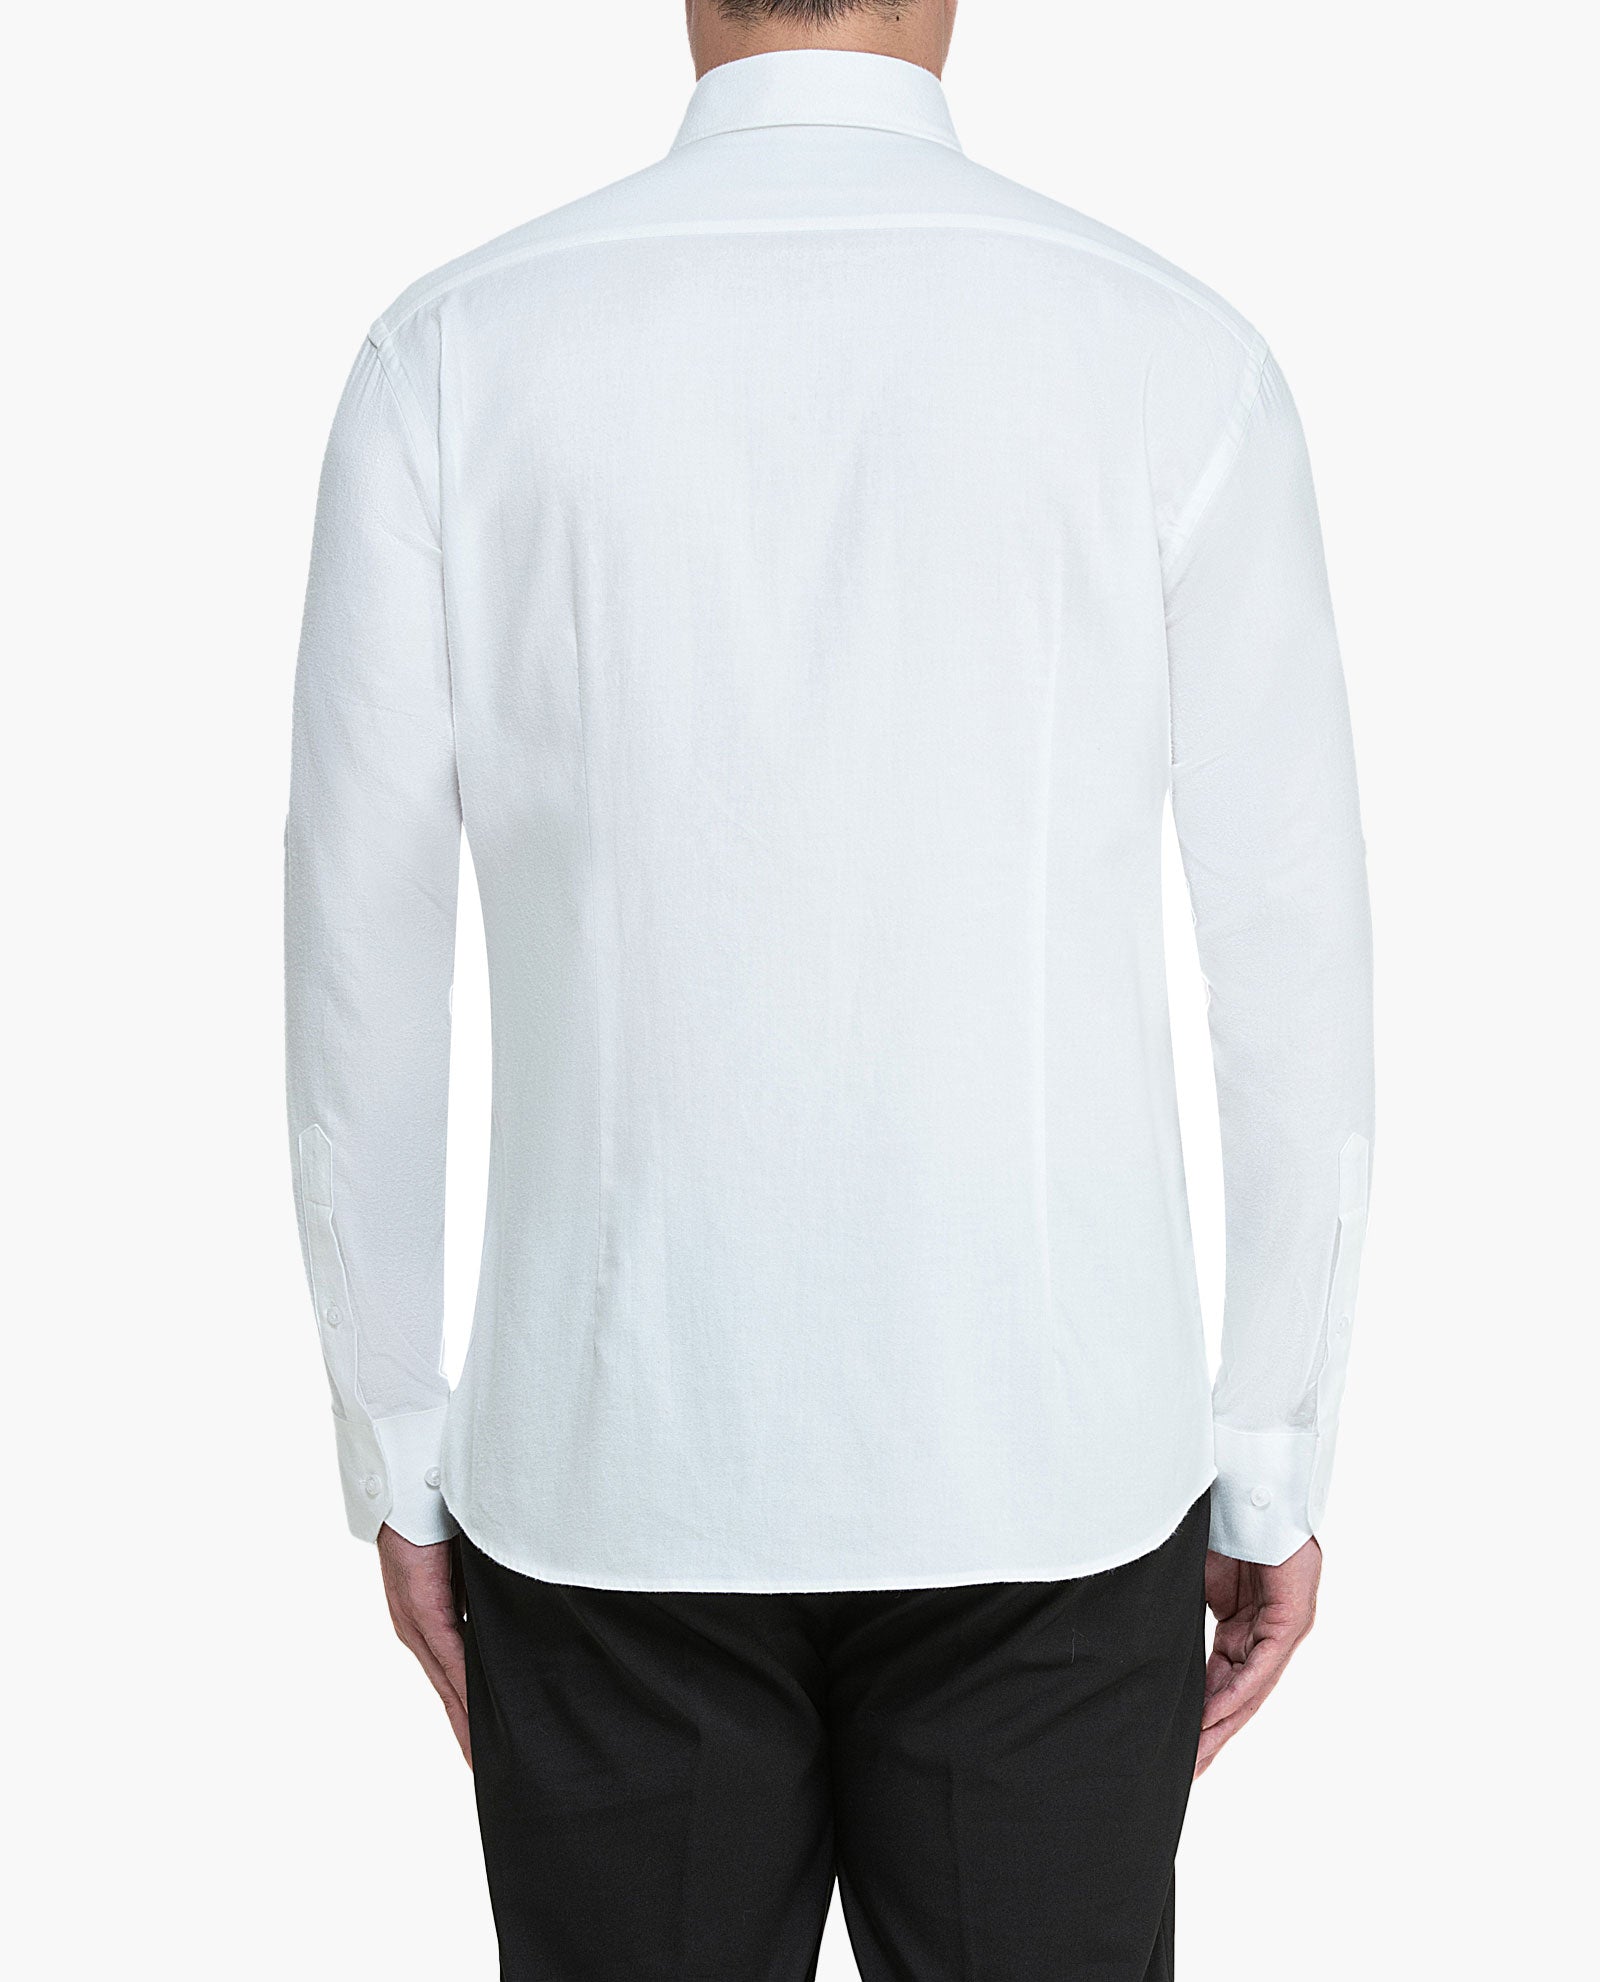 White Flannel Sport Shirt